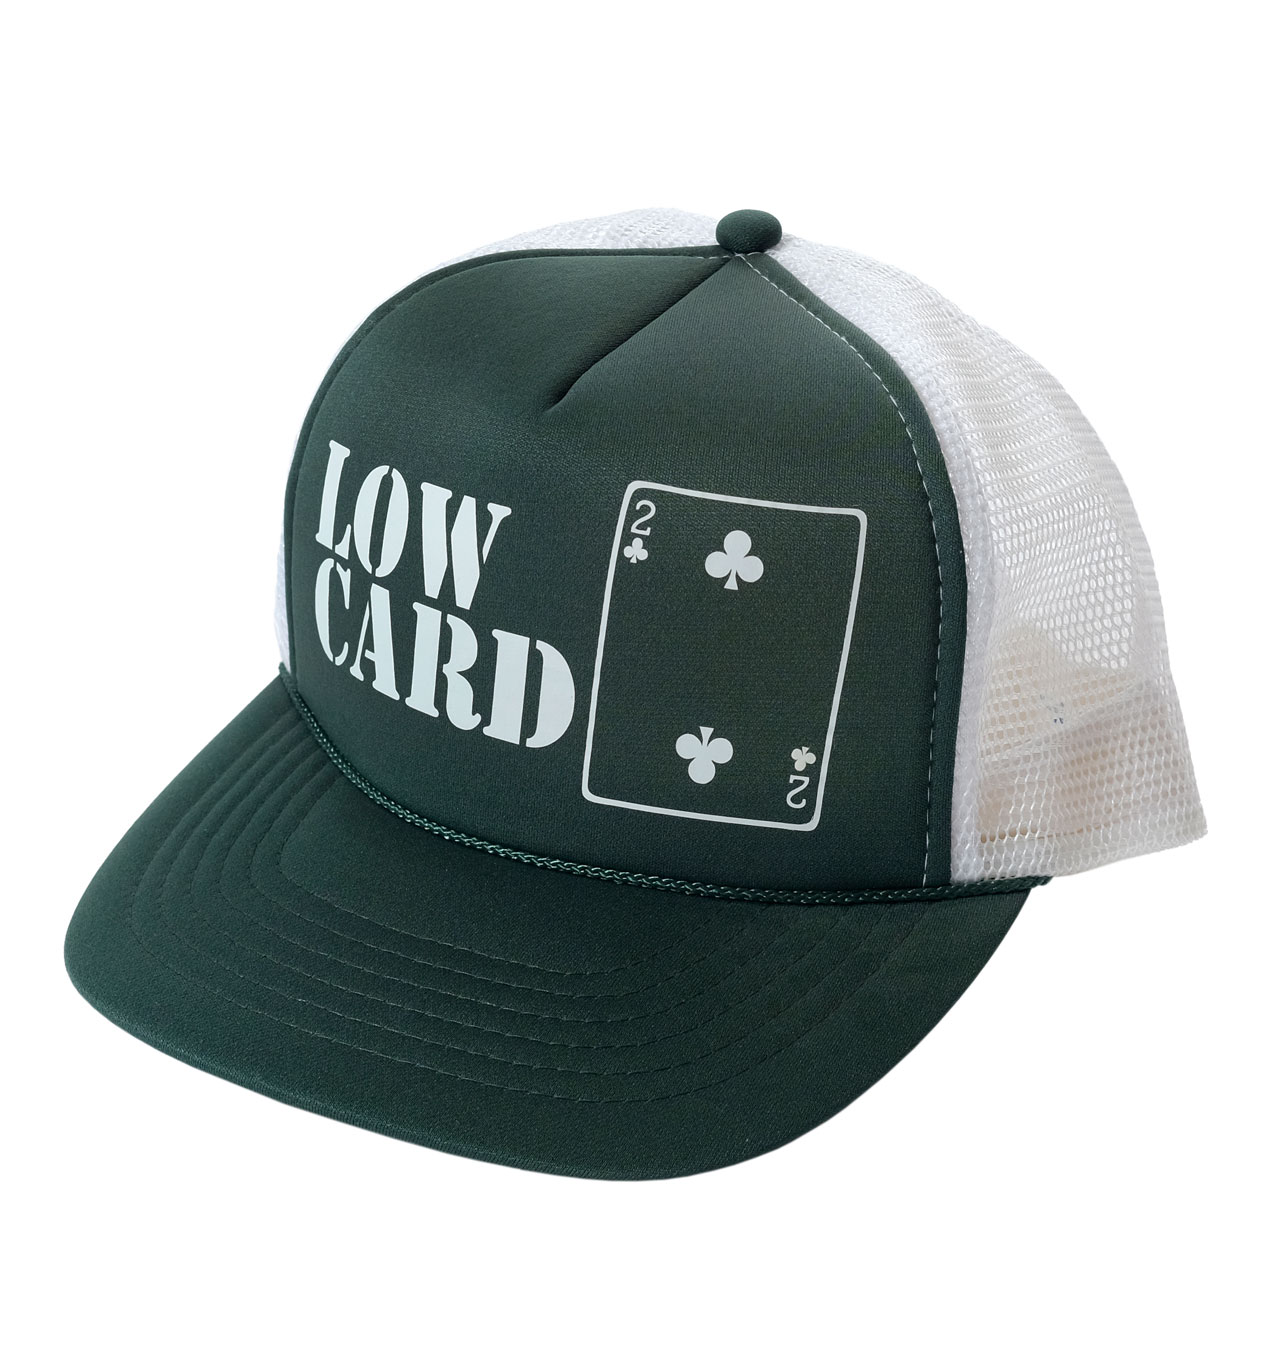 Lowcard - Original Logo Trucker Cap - White/Green